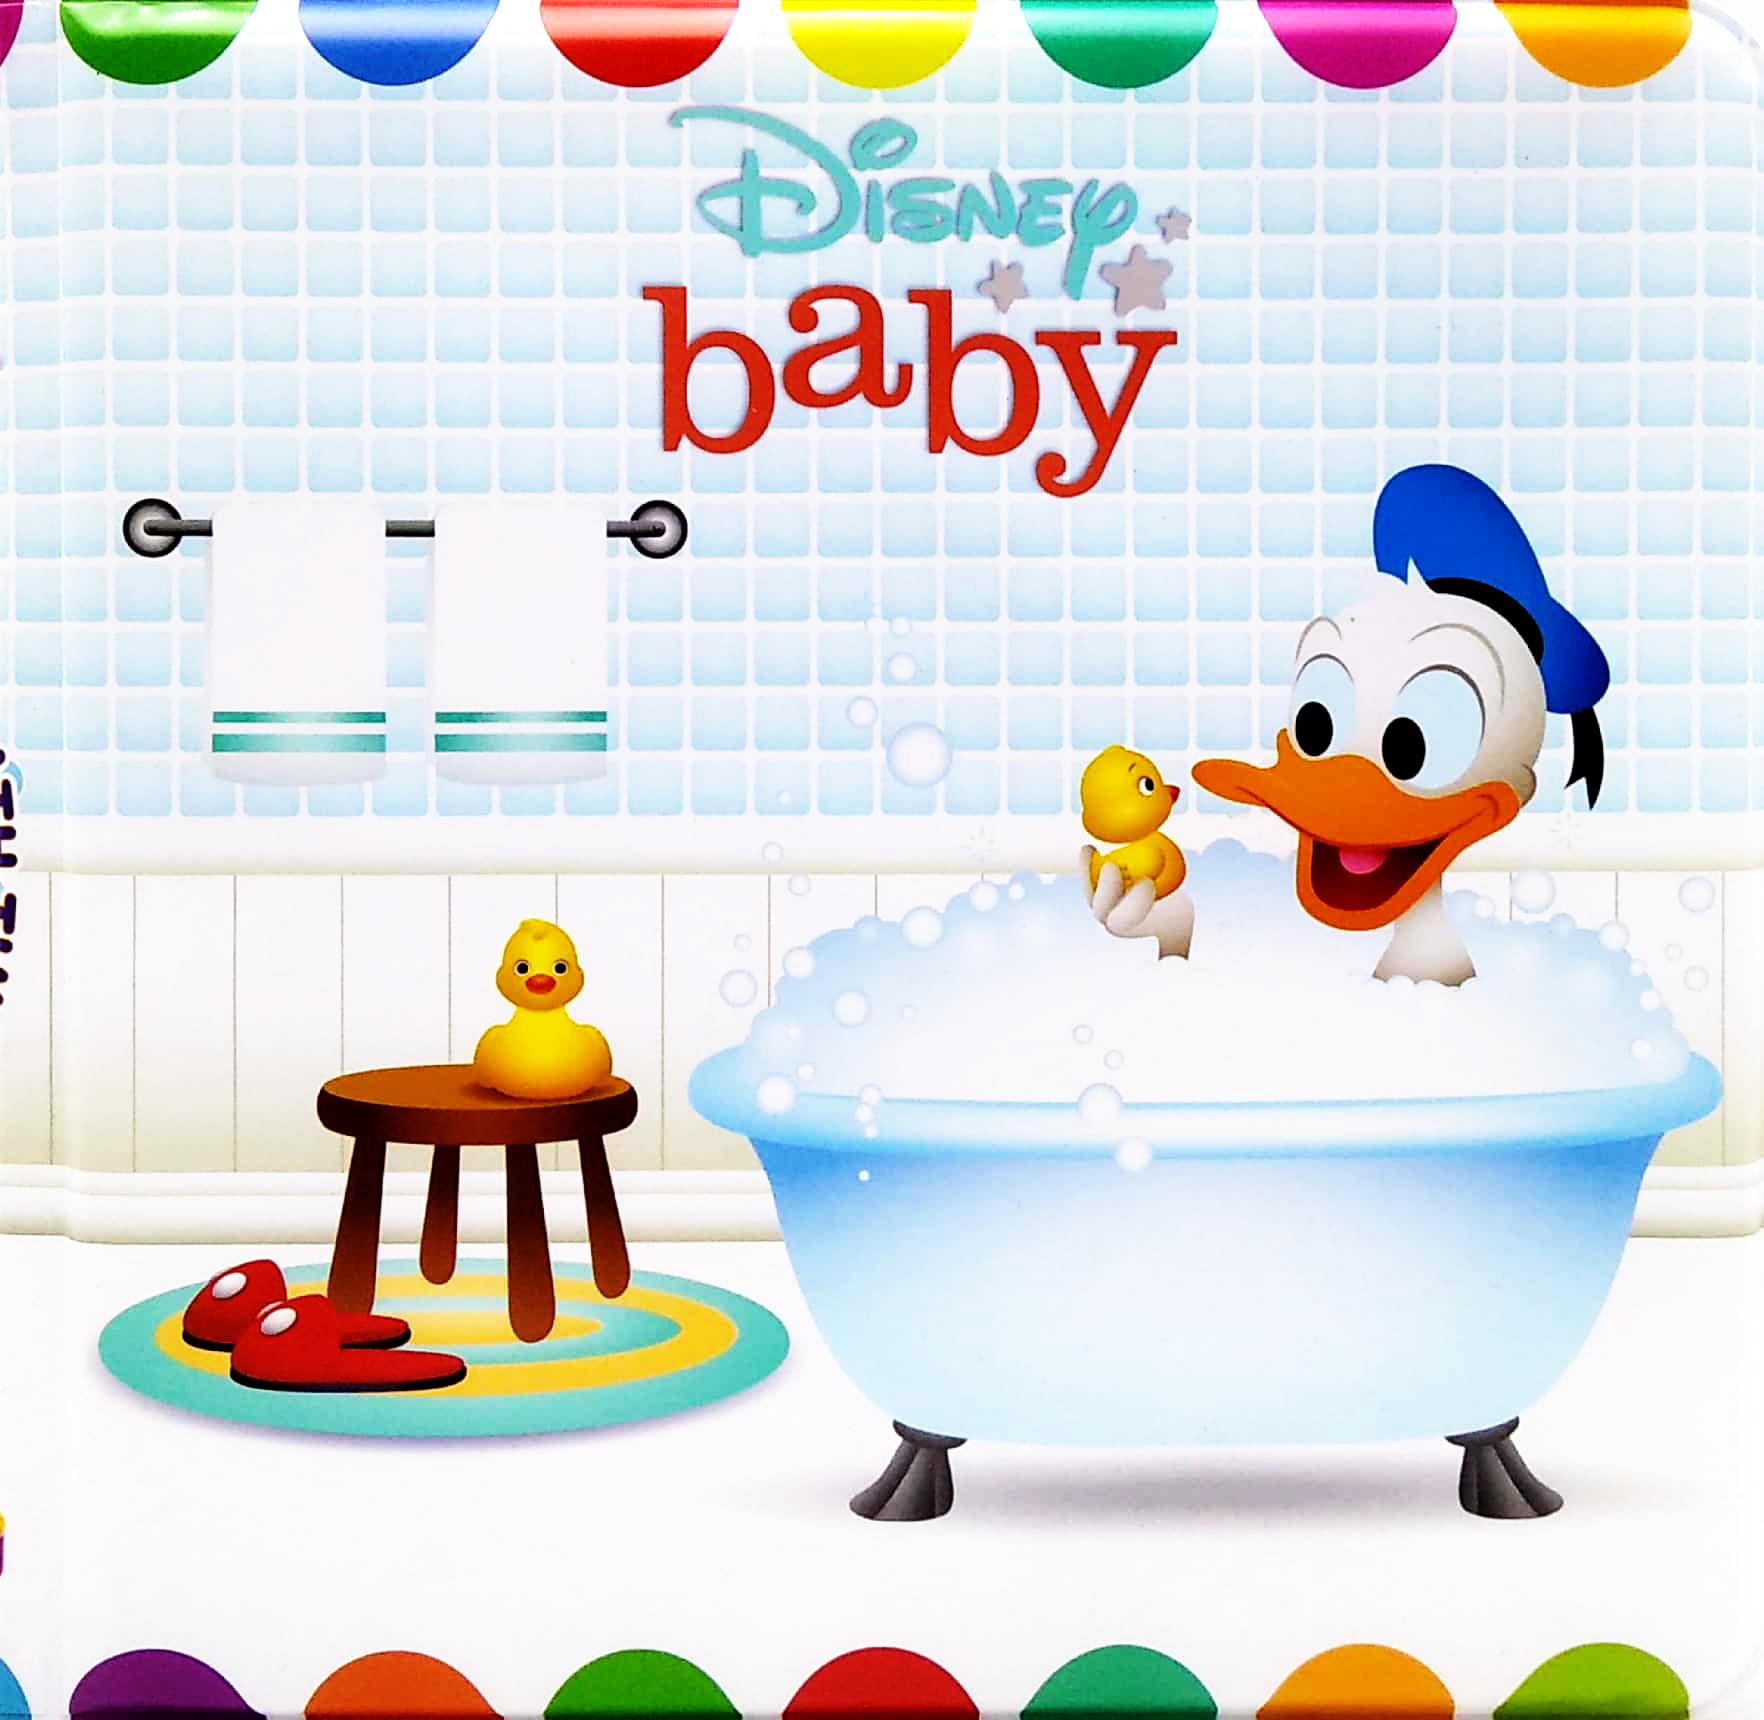 Disney Baby Bath Time Deluxe Book Set